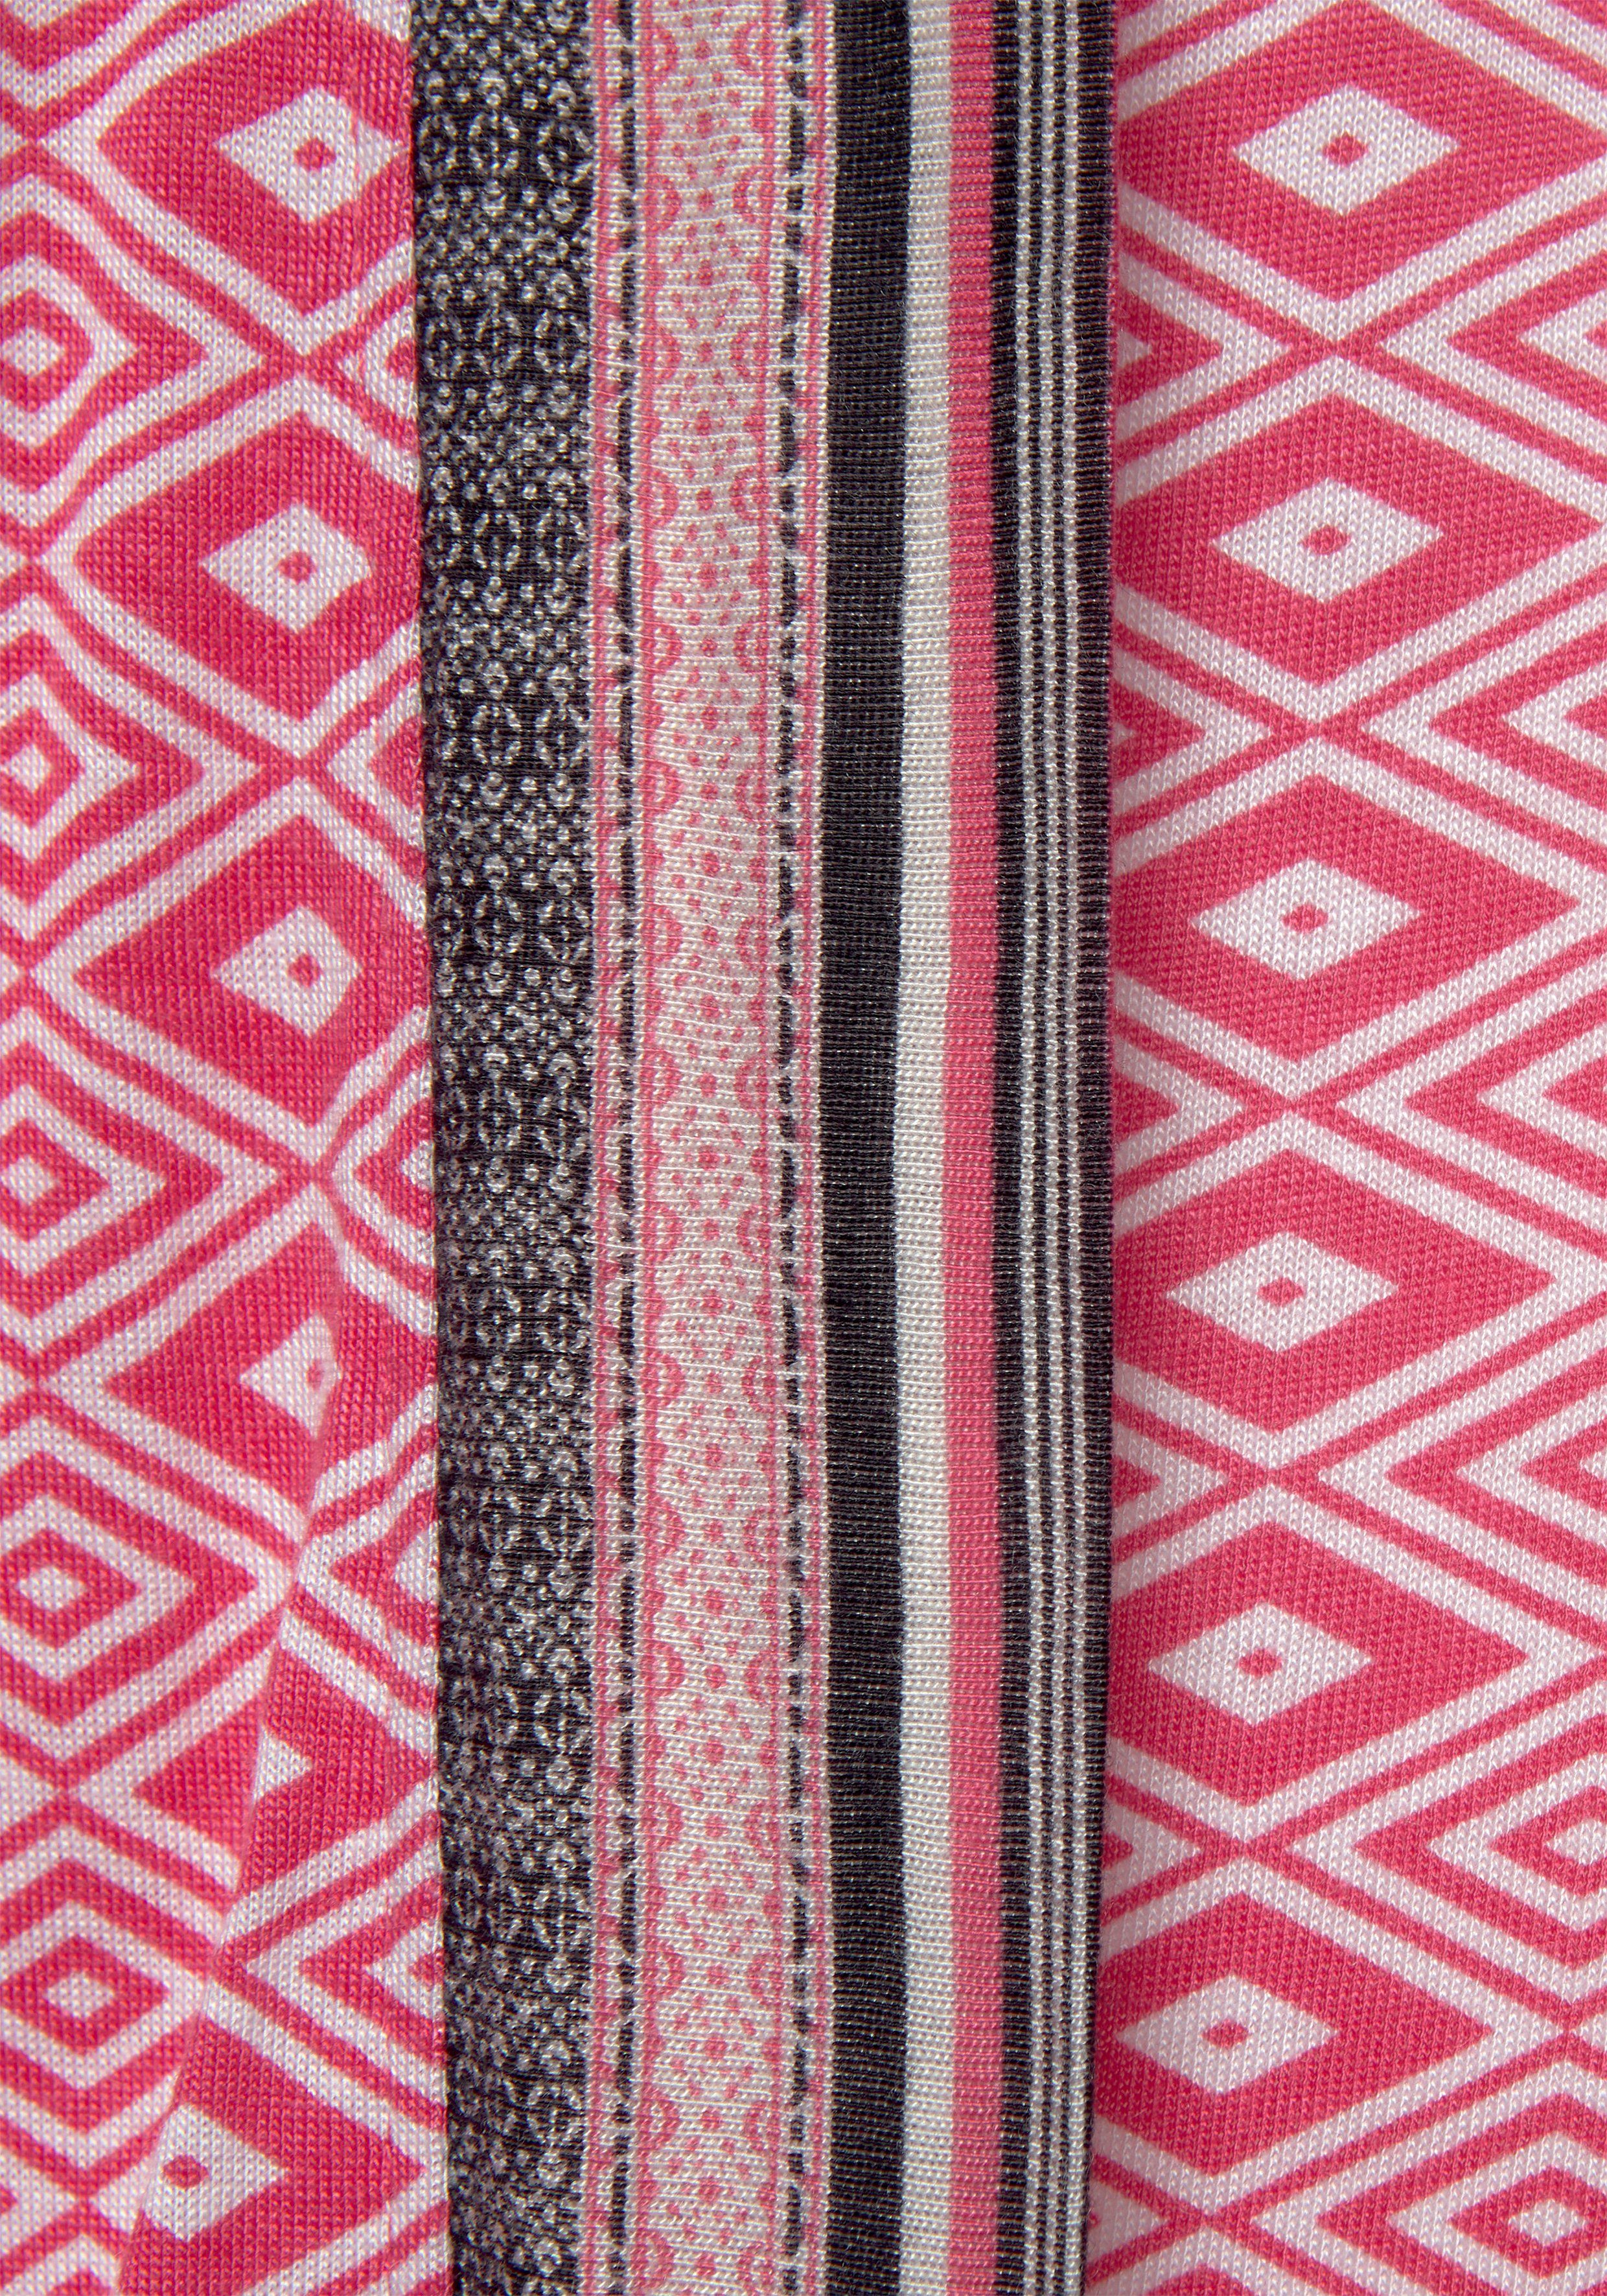 Vivance Dreams Kimono, pink Single-Jersey, Gürtel, Kurzform, schönem gemustert Ethno-Design Kimono-Kragen, in